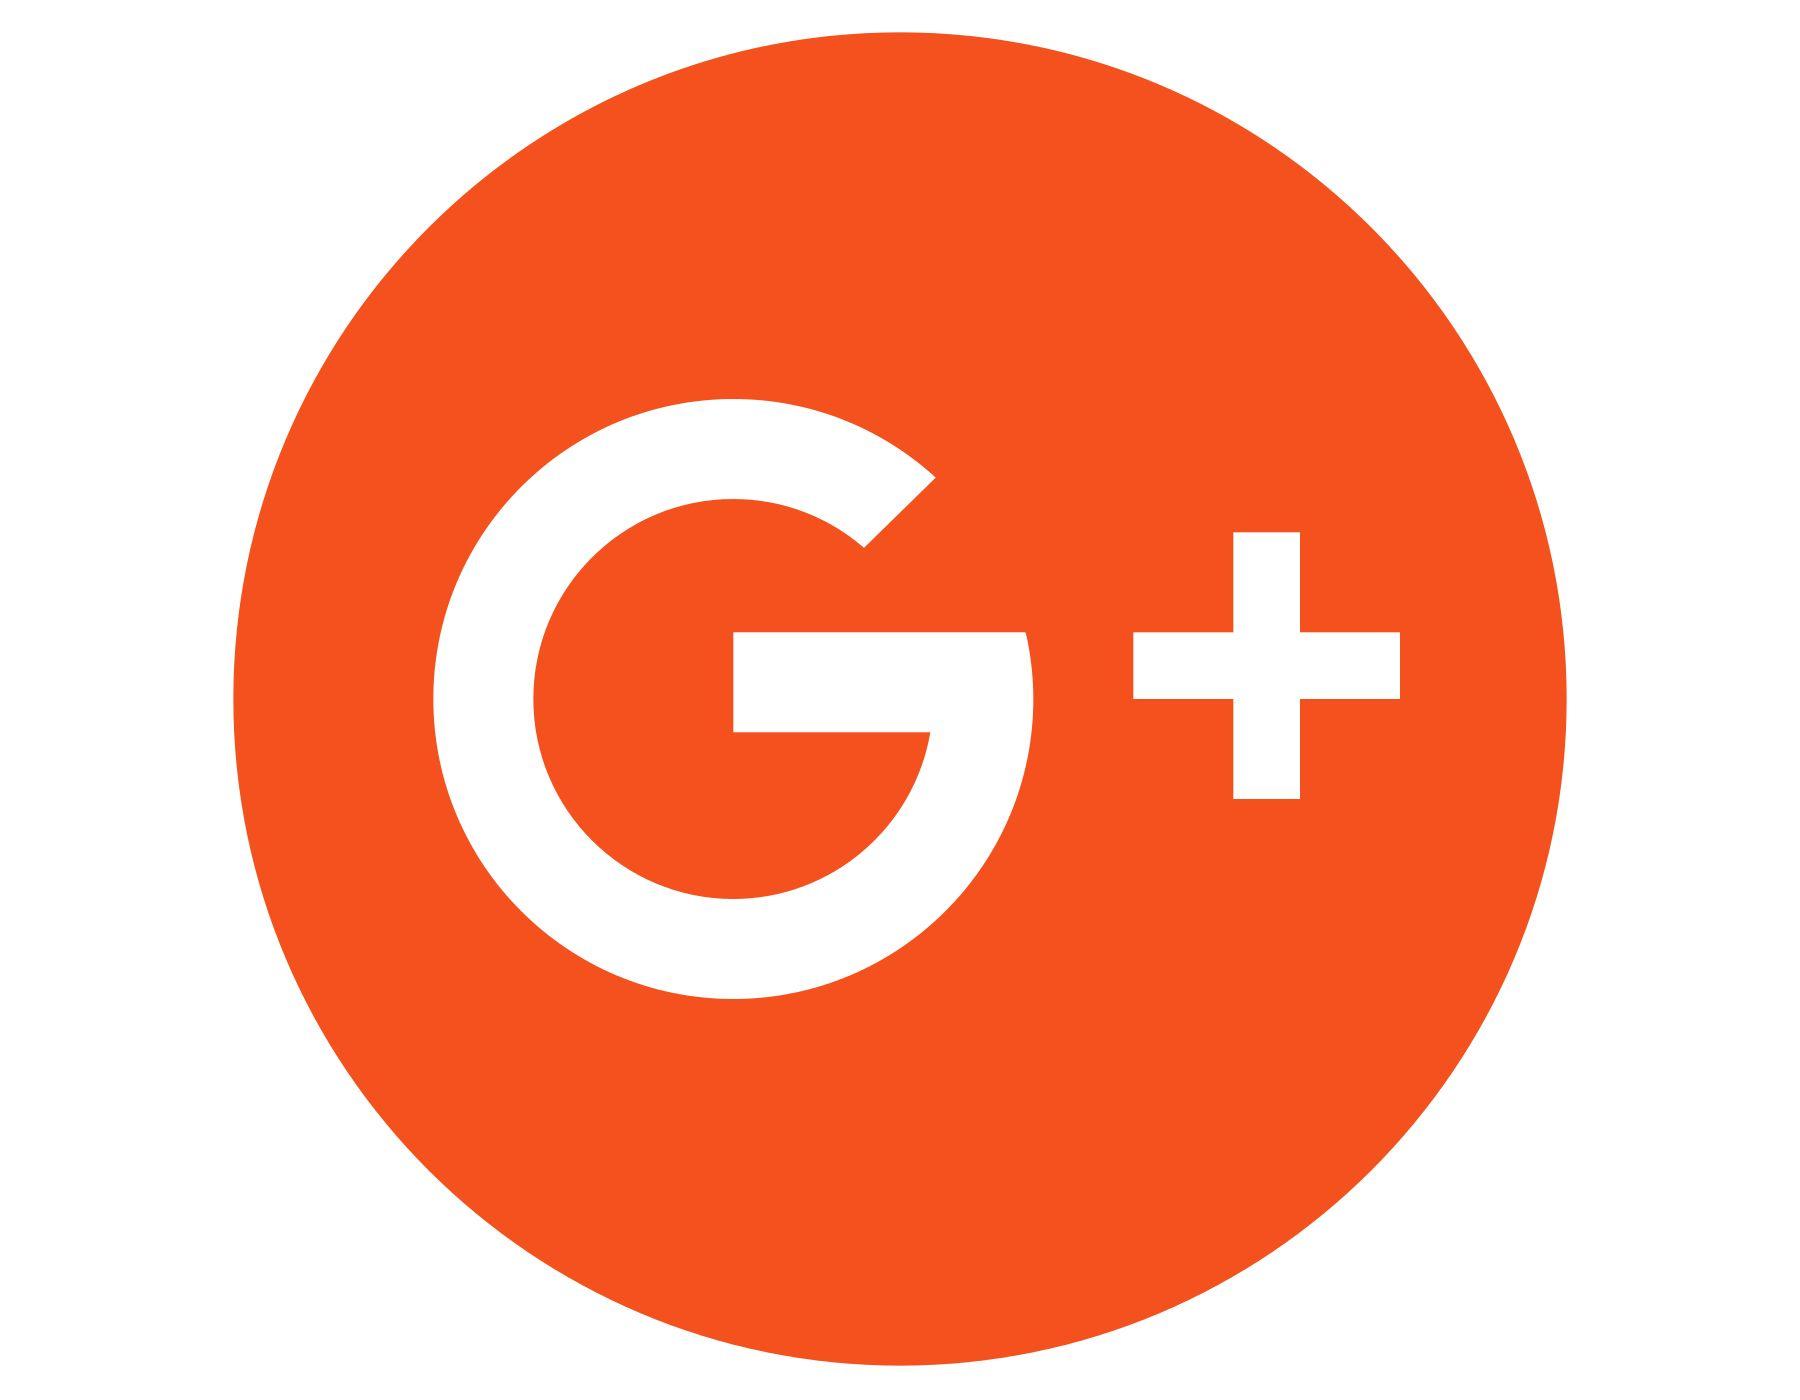 Gooogle Logo - Google Logo, Google Symbol Meaning, History and Evolution